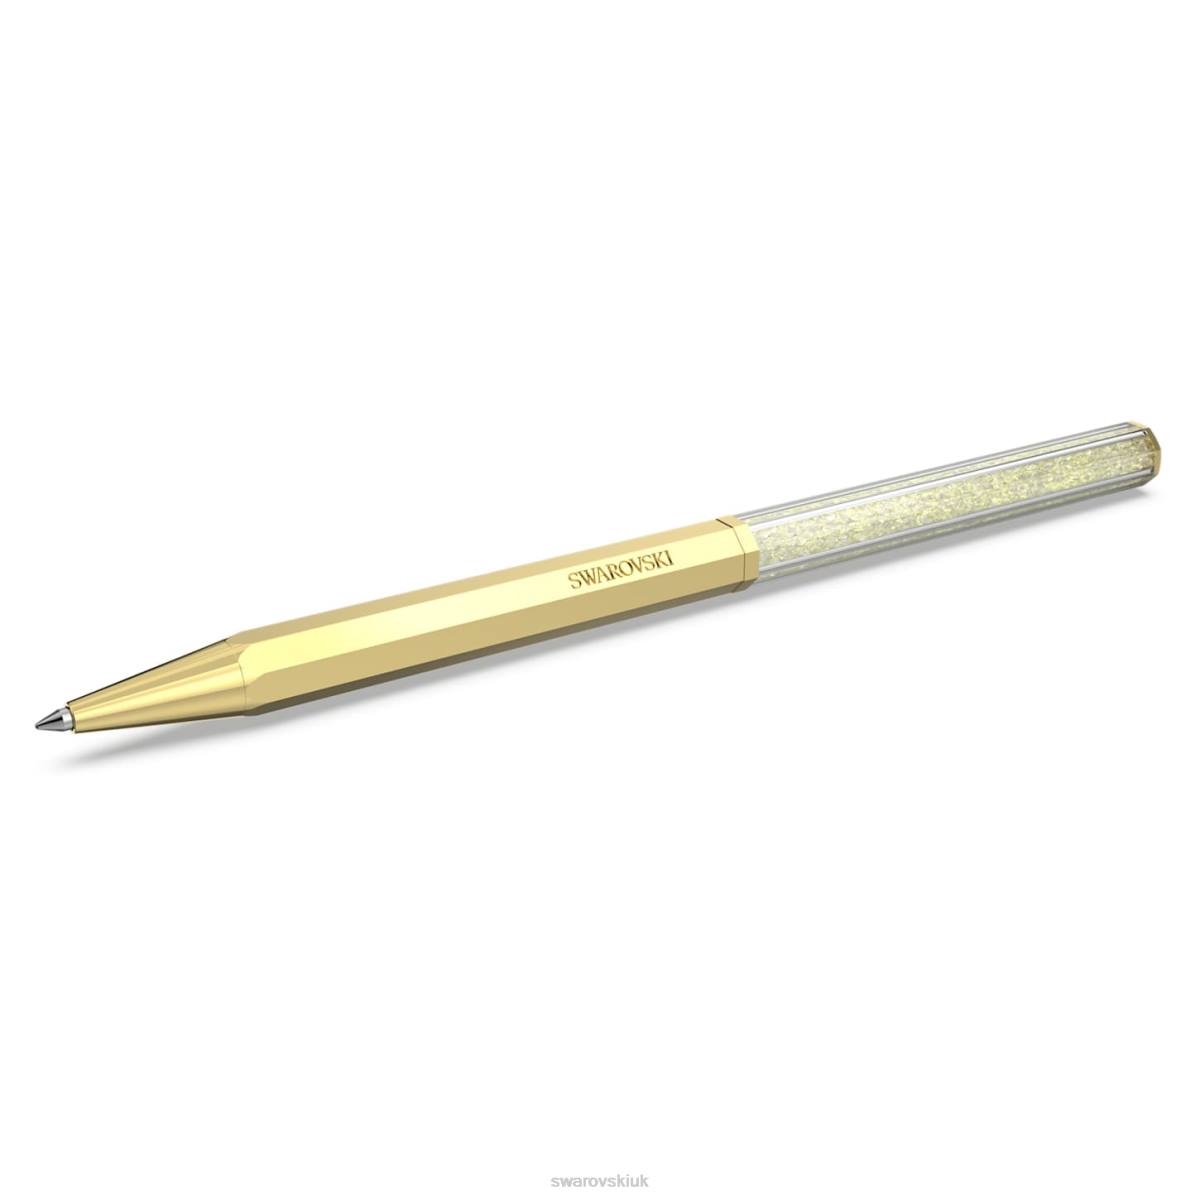 Accessories Swarovski Crystalline ballpoint pen Octagon shape, Gold tone, Gold-tone plated 48JX1261